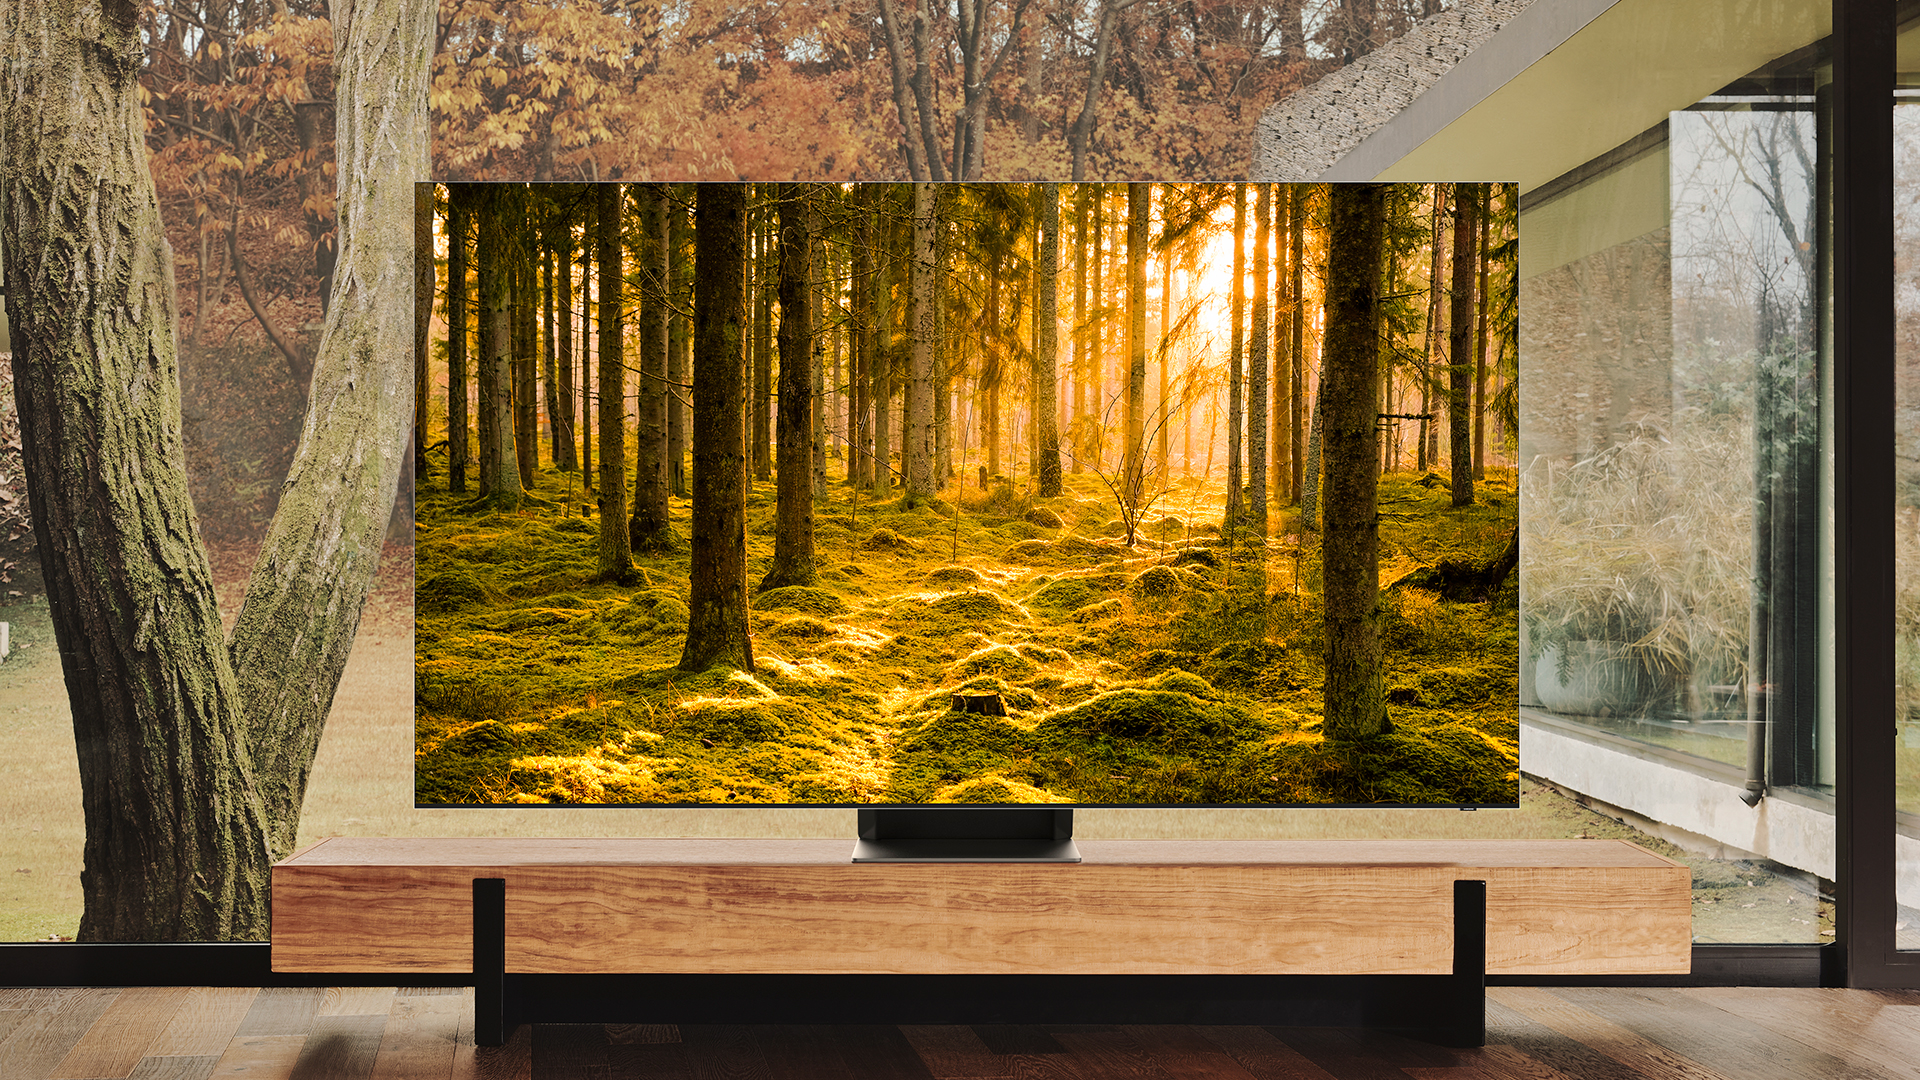 Samsung QN900B Neo QLED 8K TV displaying a woodland scene